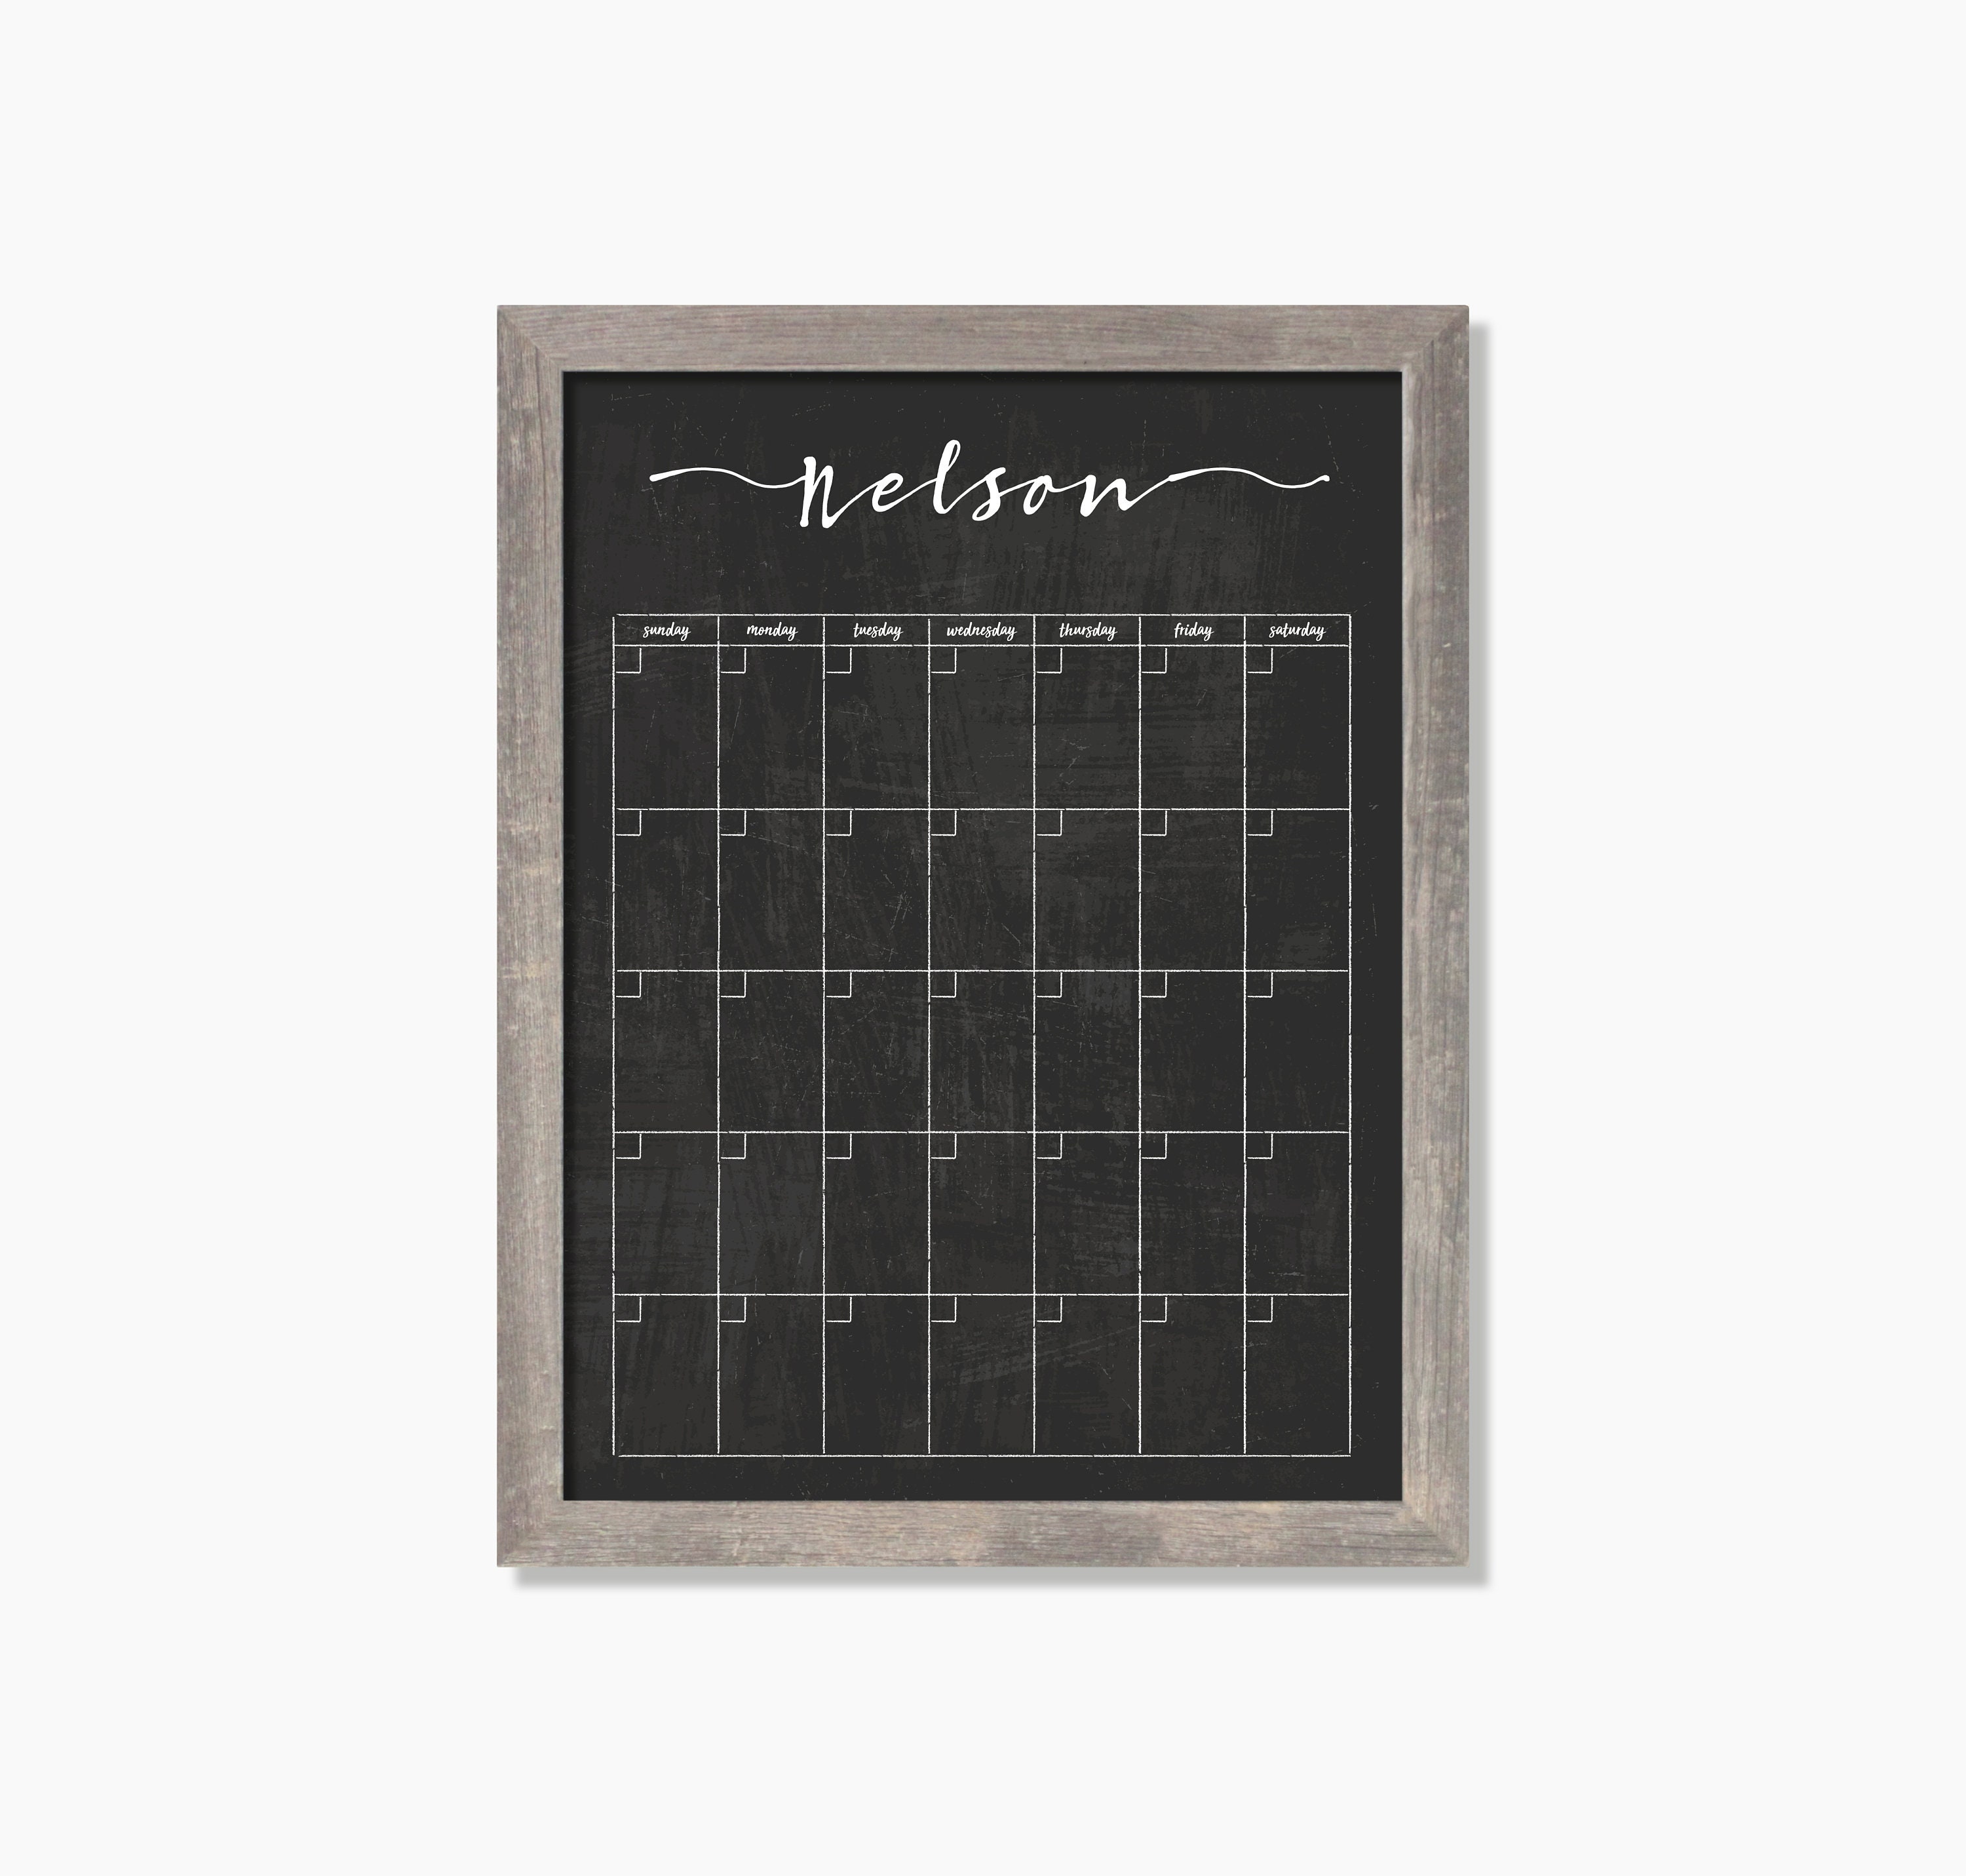 Chalkboard Wall Calendar with Memo - Vinyl Wall Decal